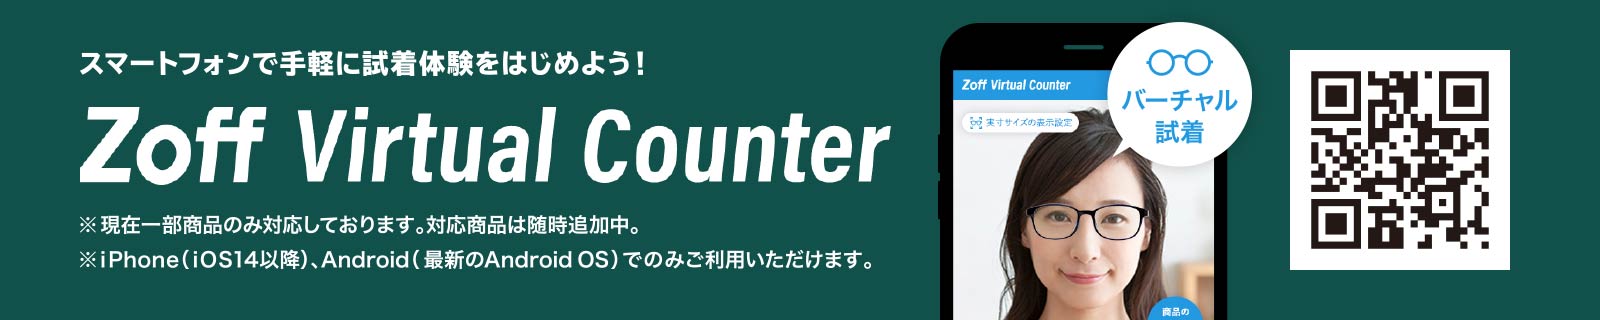 Zoff Virtual Counter